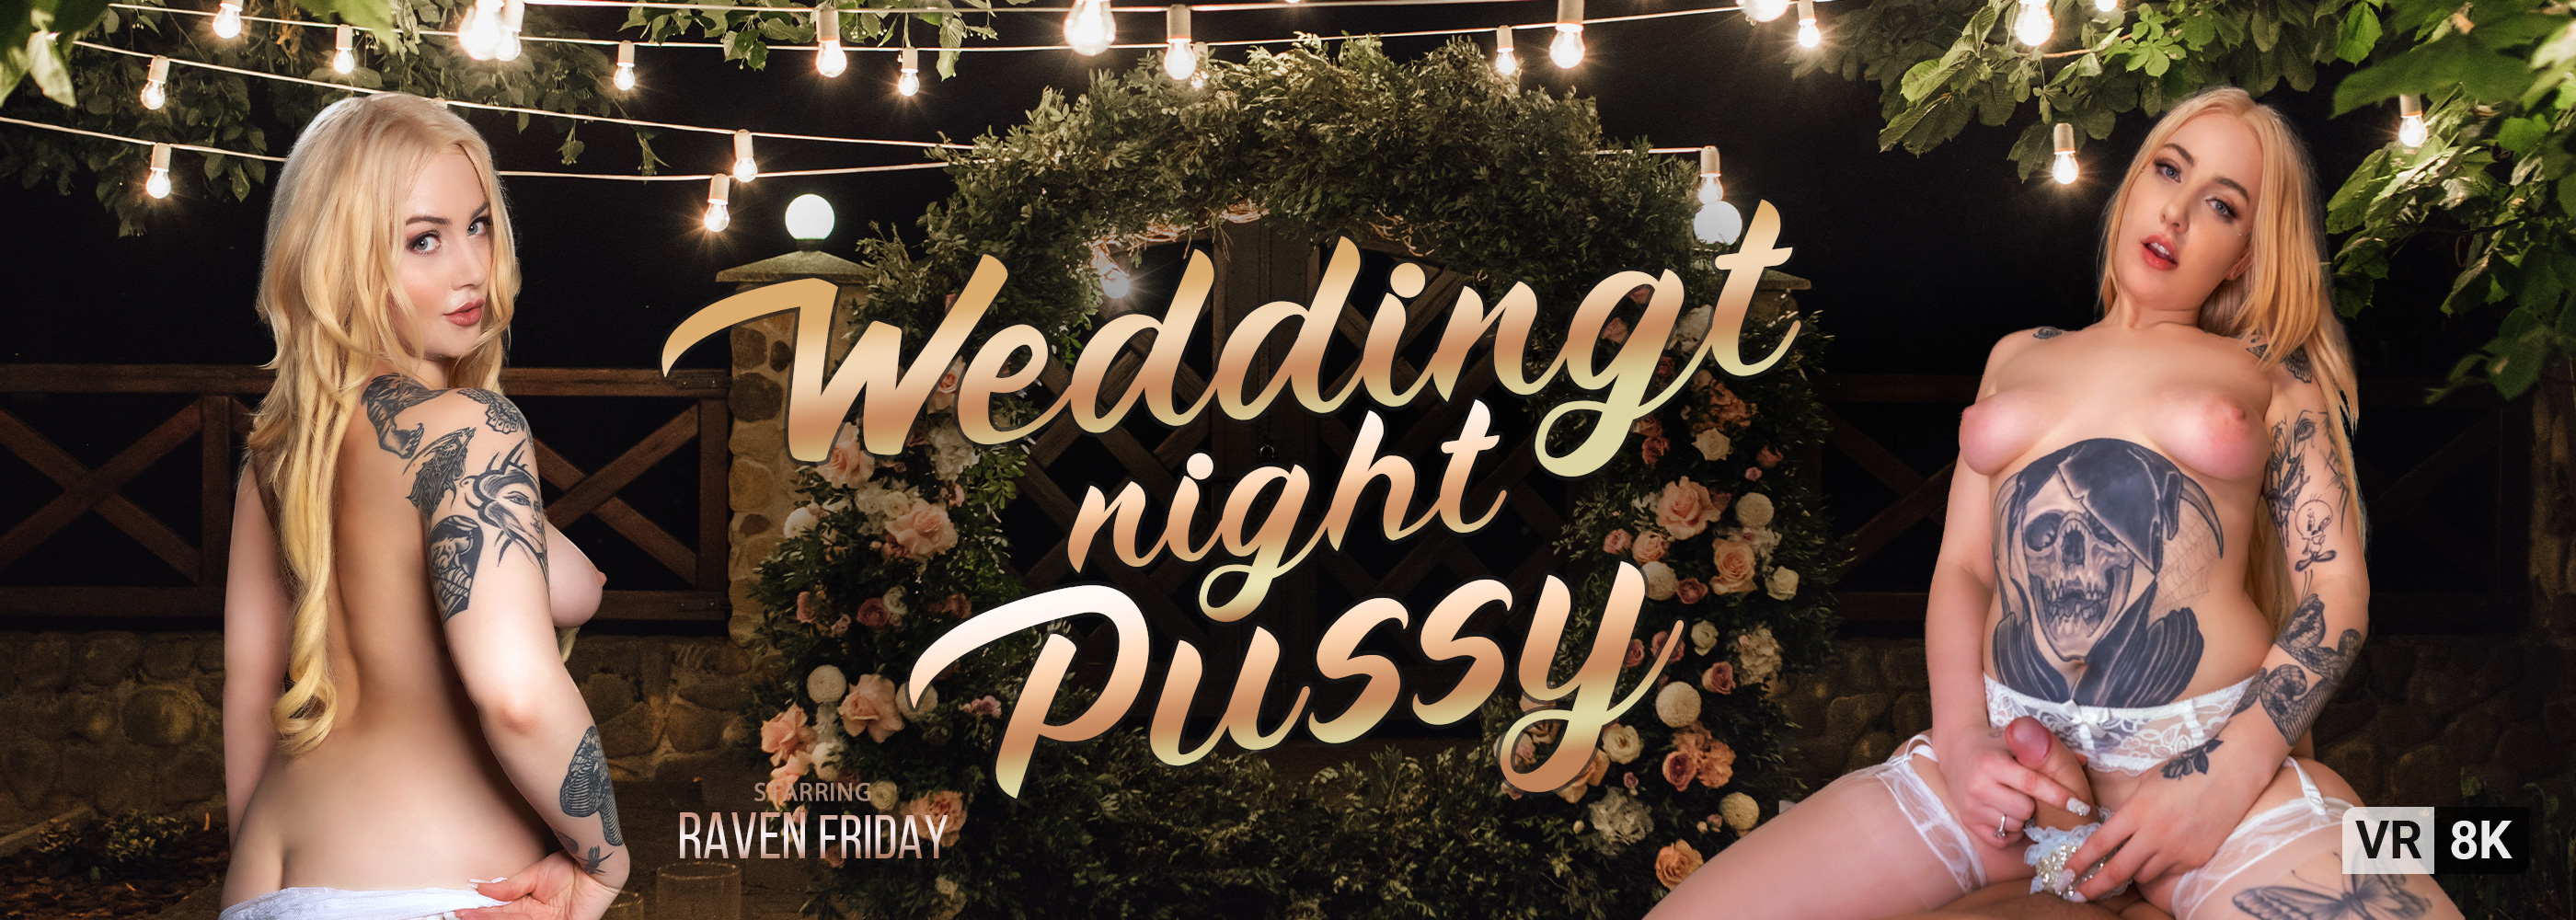 Wedding Night Pussy - VR Porn Video, Starring: Raven Friday